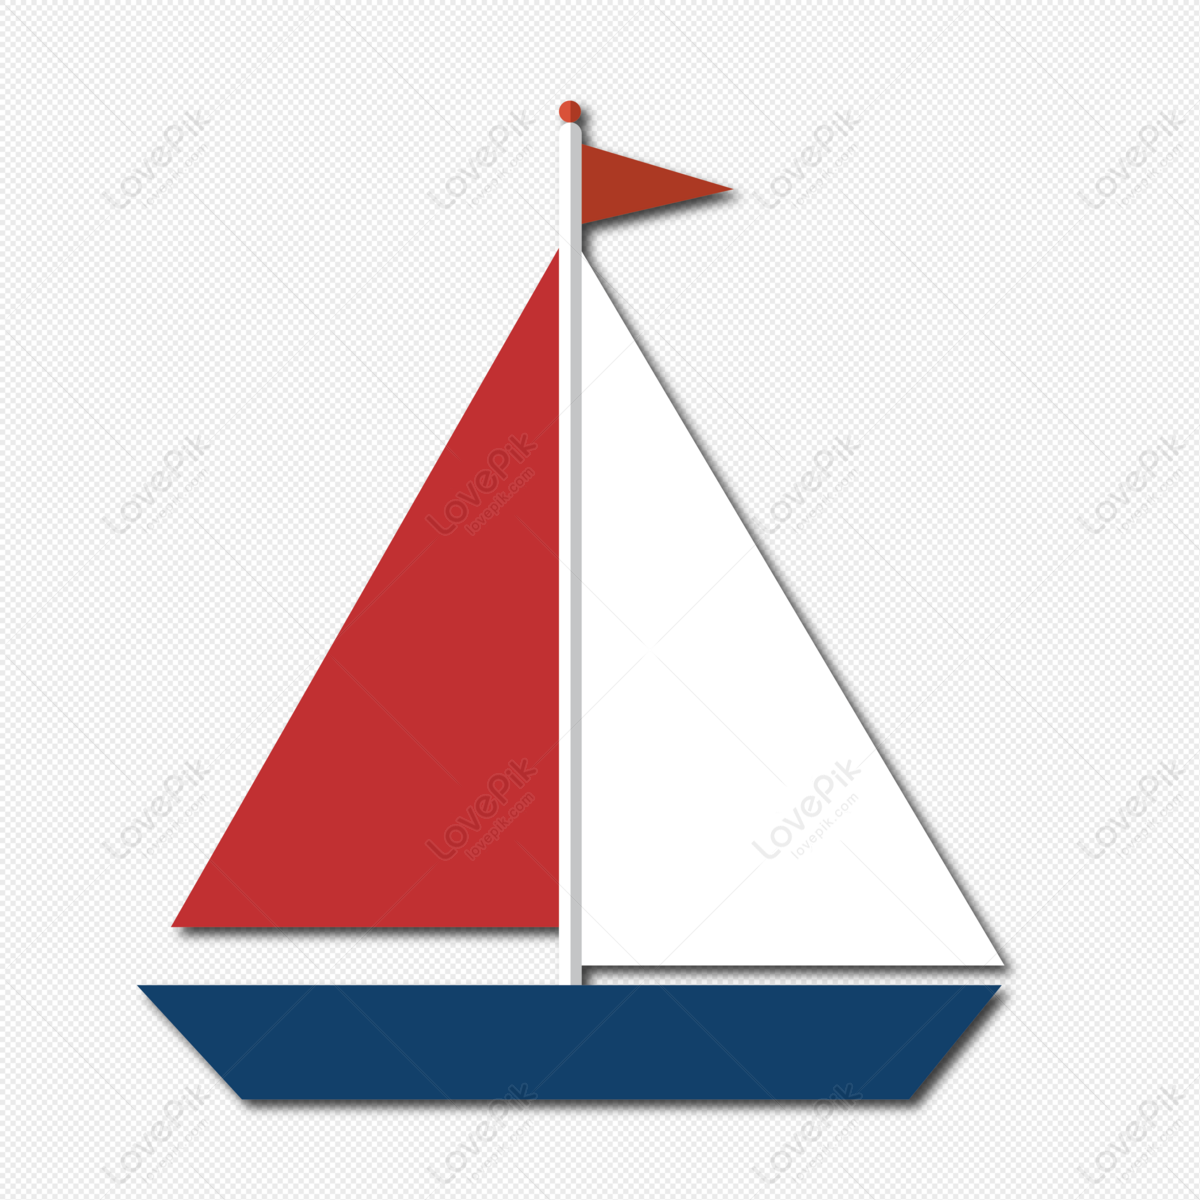 Sailboat, nautical elements, material, sailing png image free download